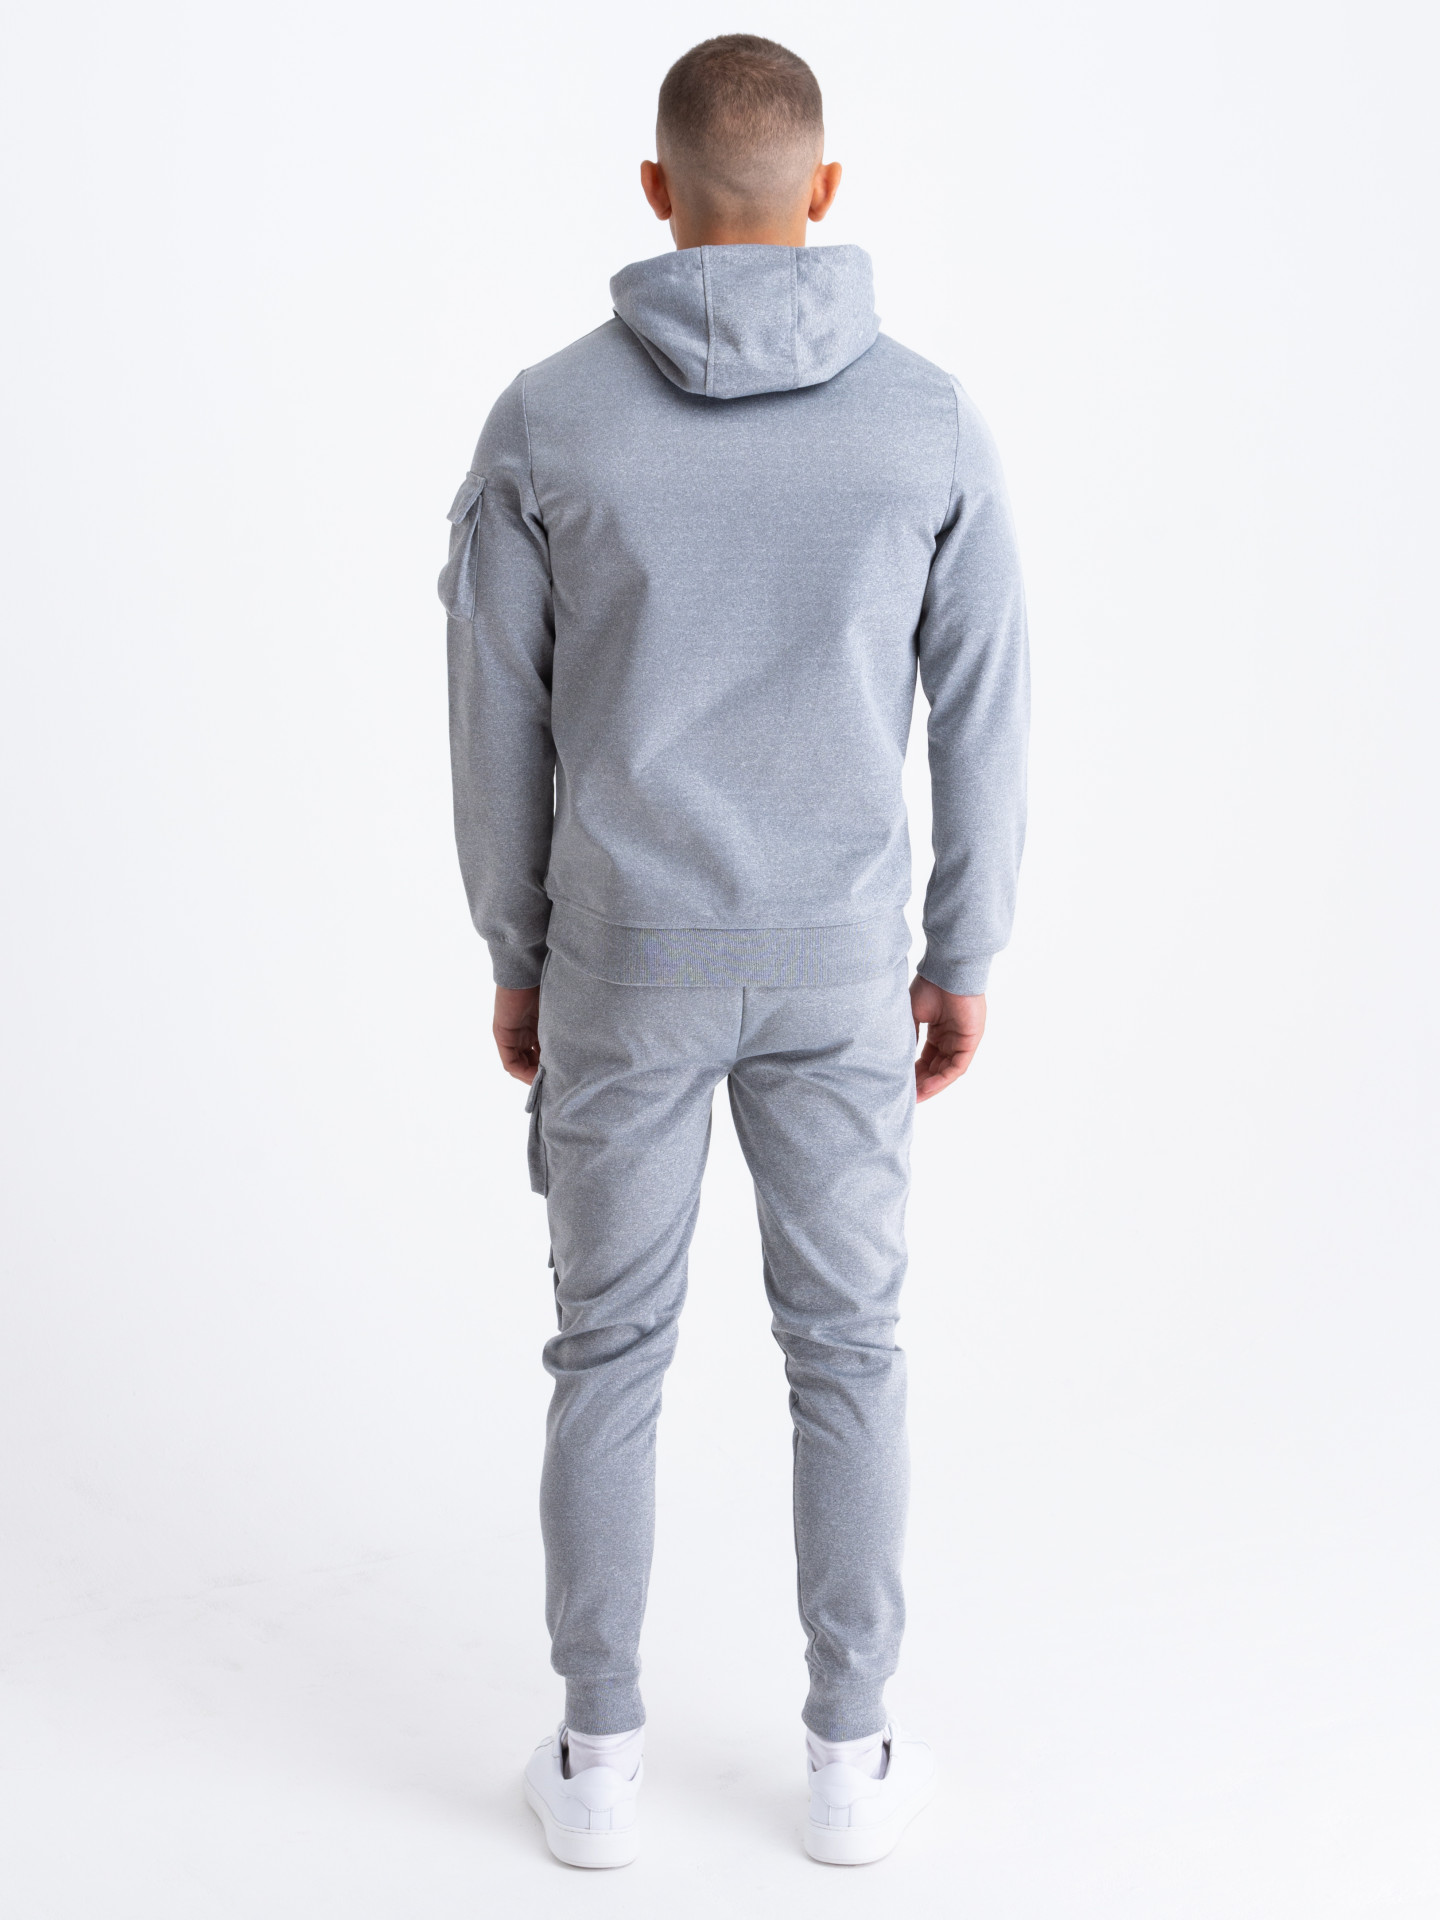 Cargo Fredo Tracksuit in Light Grey | Men's Clothing & Fashion | HisColumn